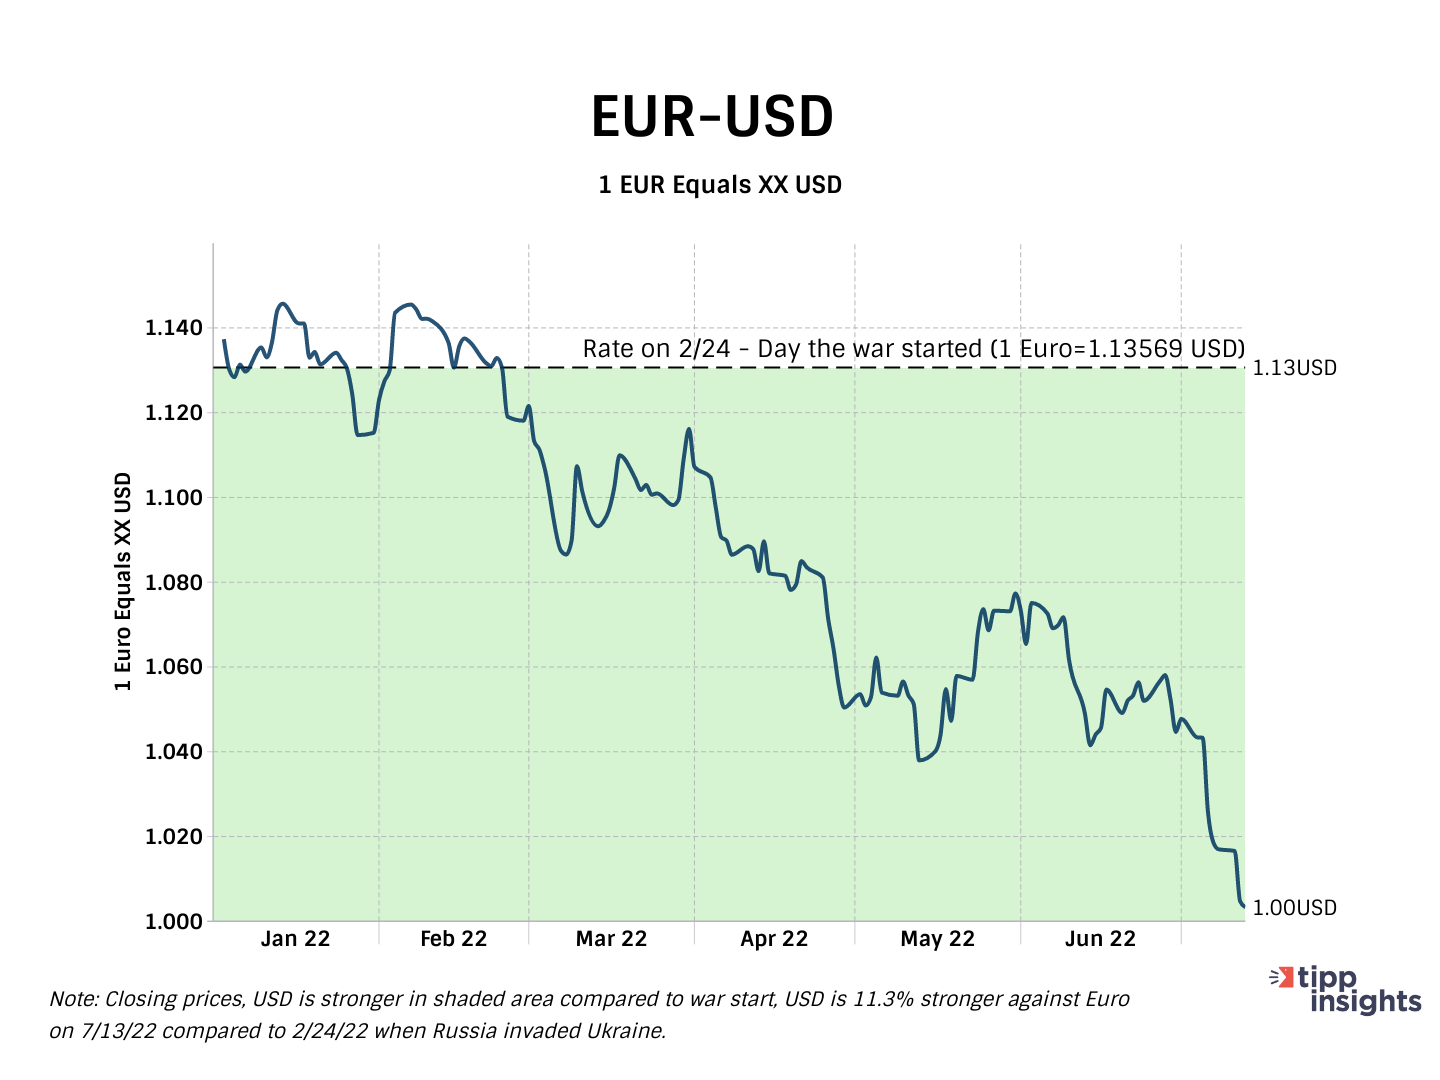 Euro-USD closing prices january 2022 - June 2022